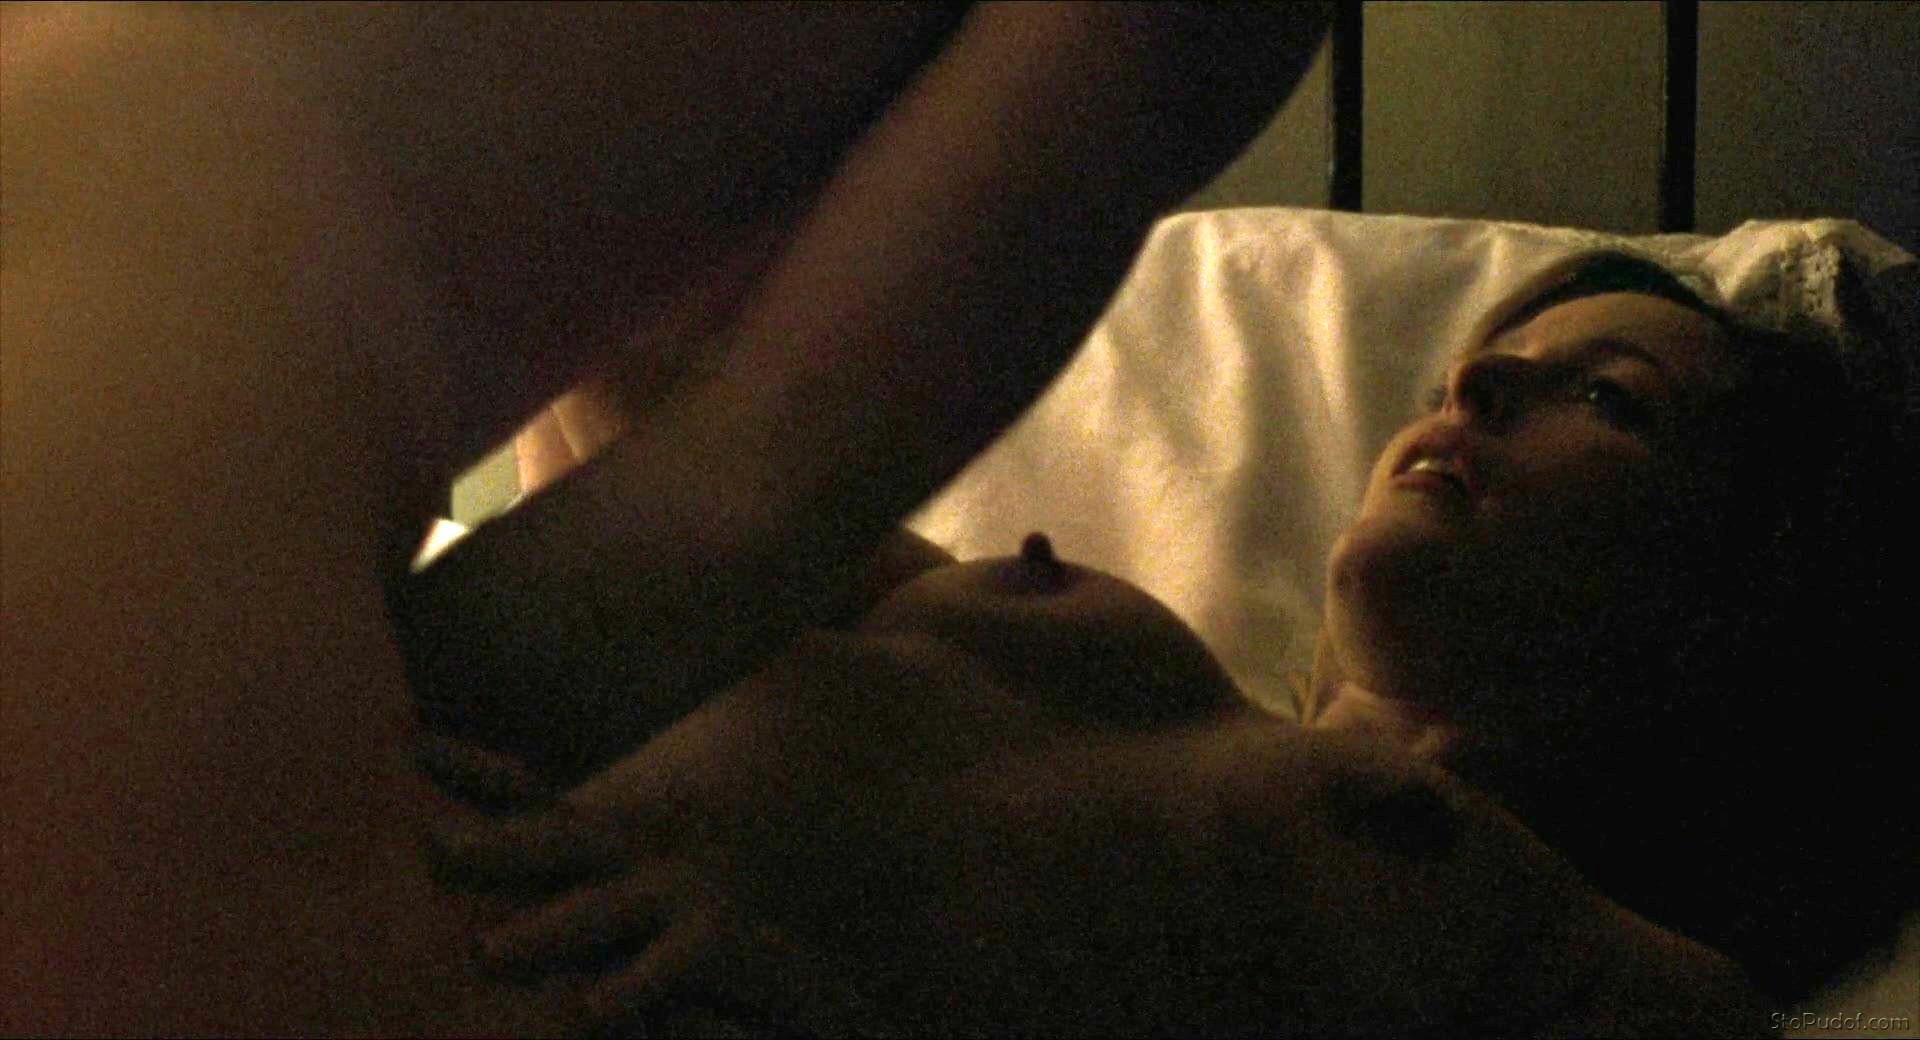 Gillian Anderson real nudes - UkPhotoSafari